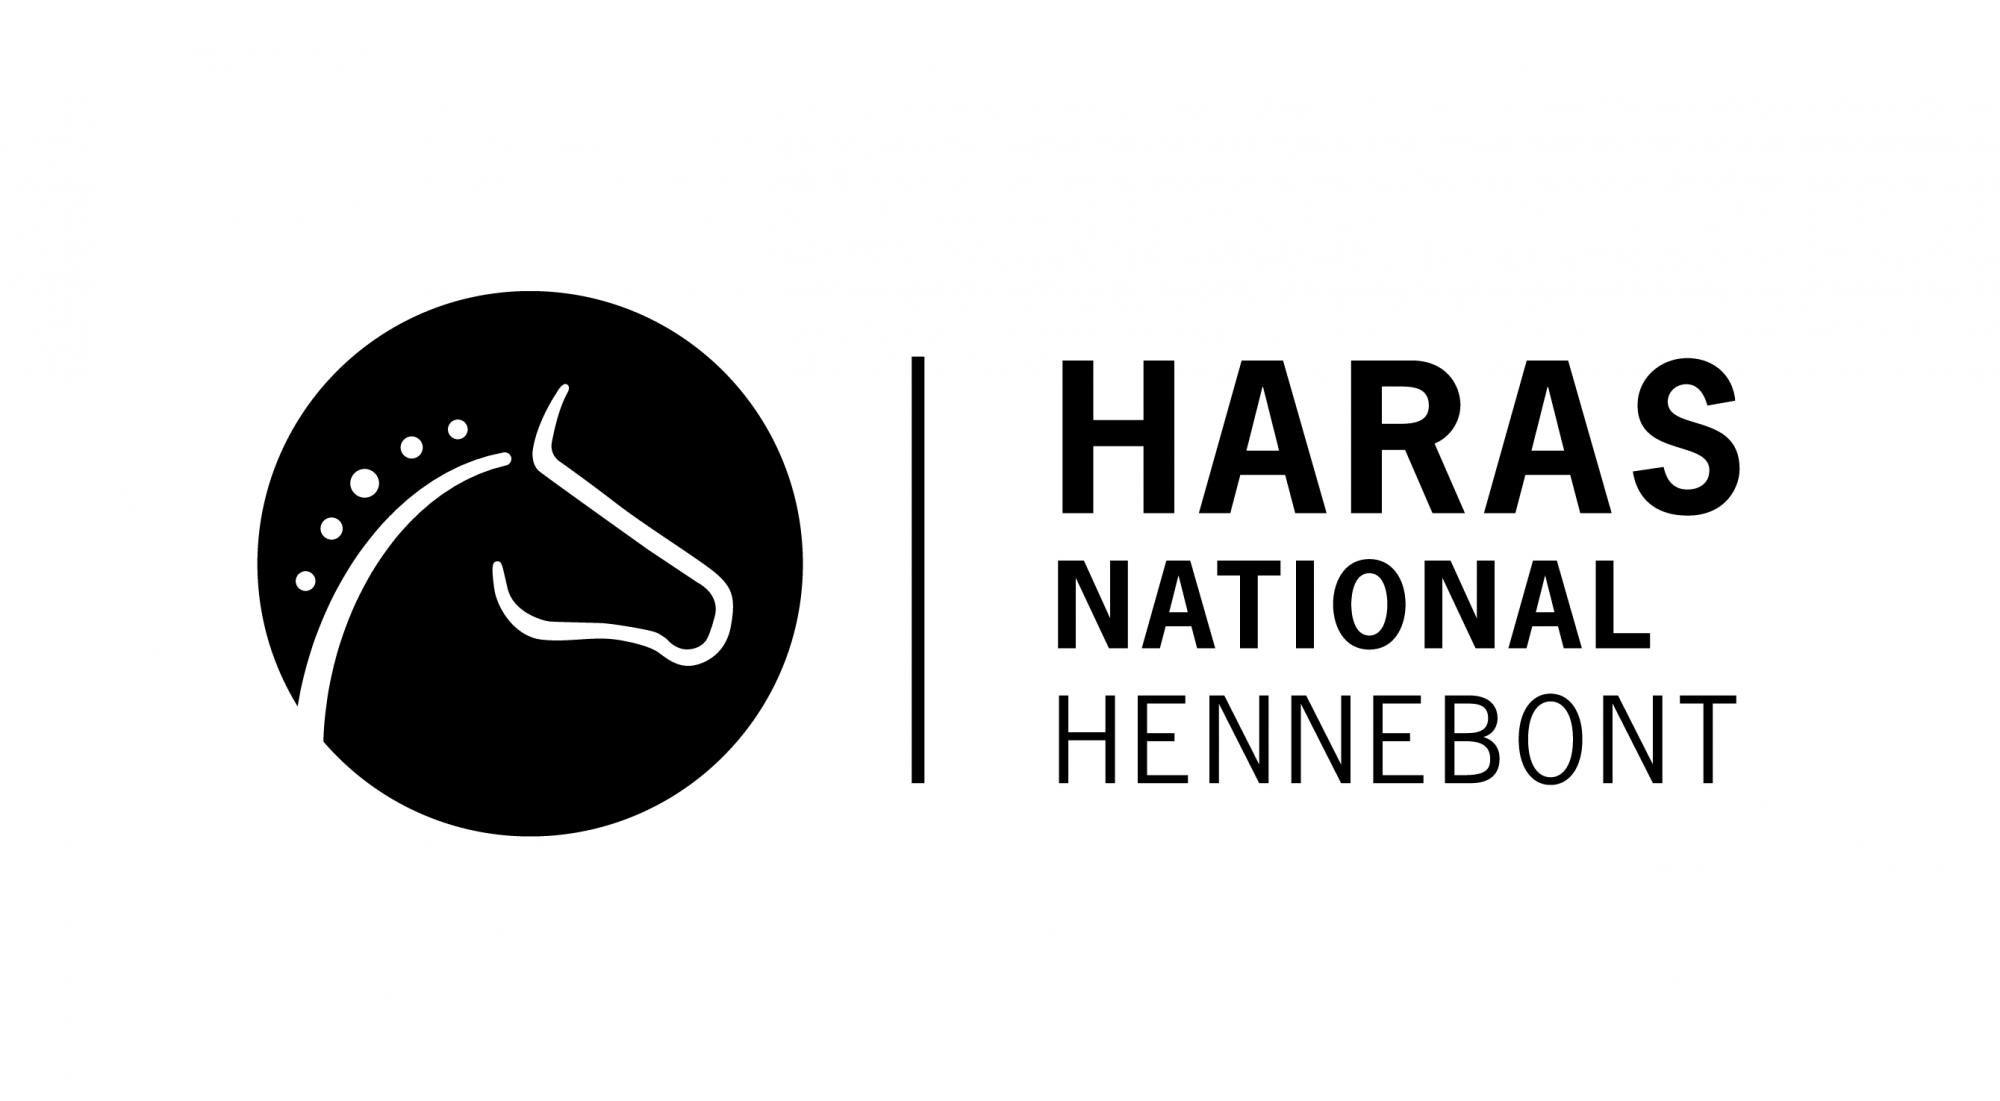 Harras Hennebont